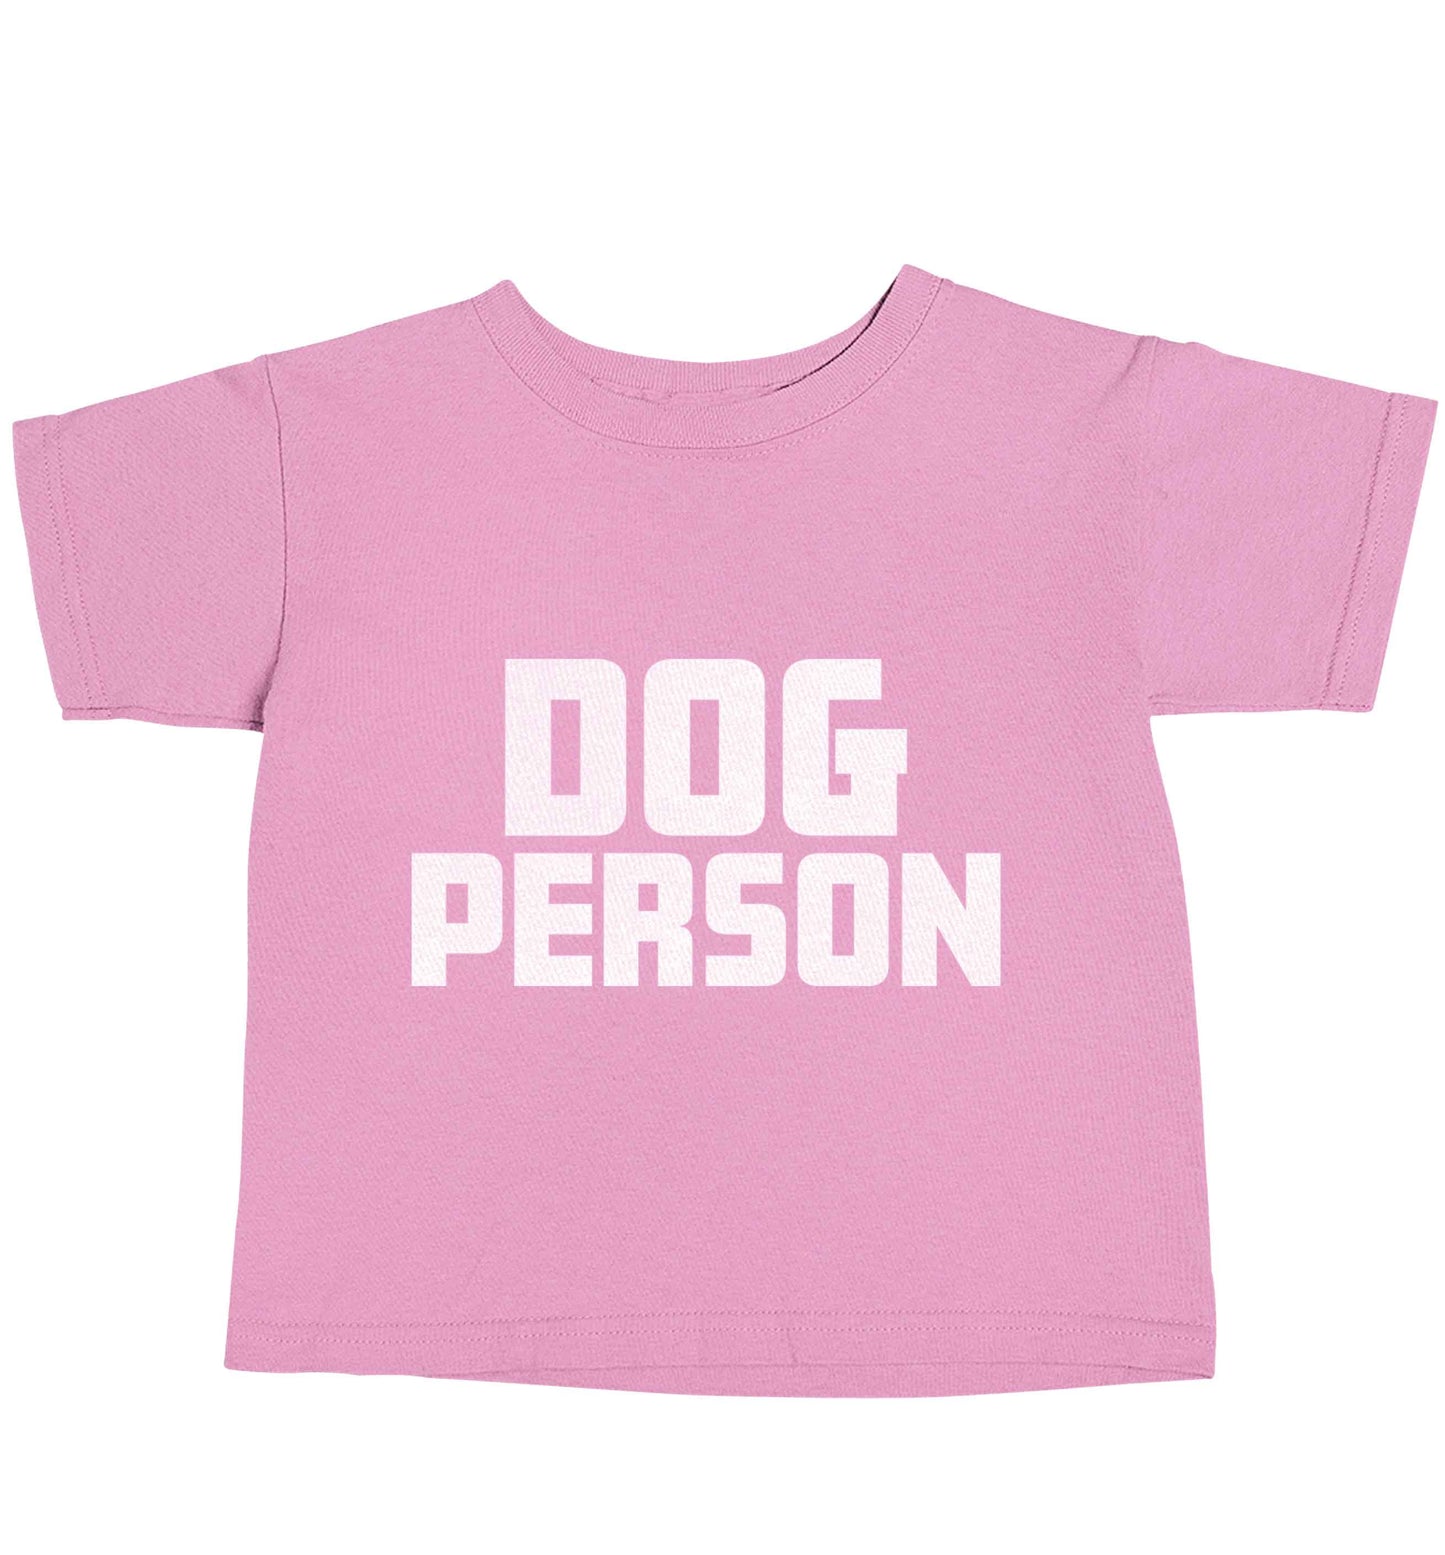 Dog Person Kit light pink baby toddler Tshirt 2 Years